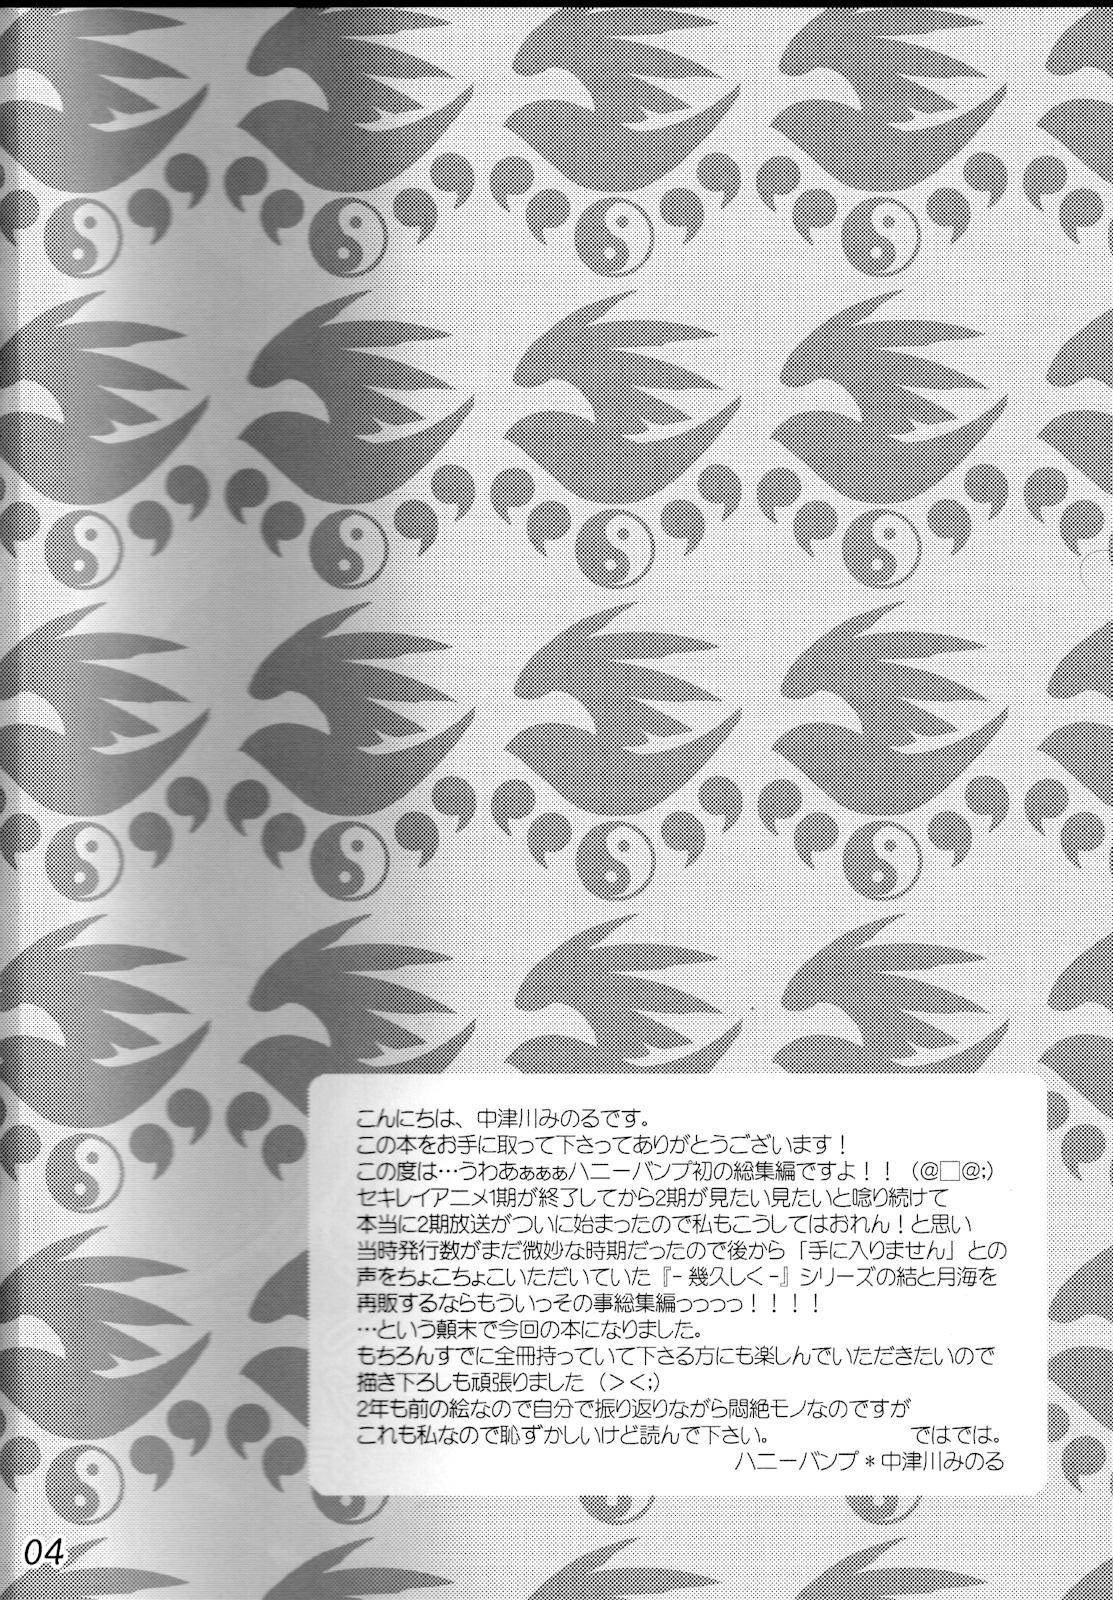 Ikuhisashiku - Honey Bump Sekirei Compilation Book 2